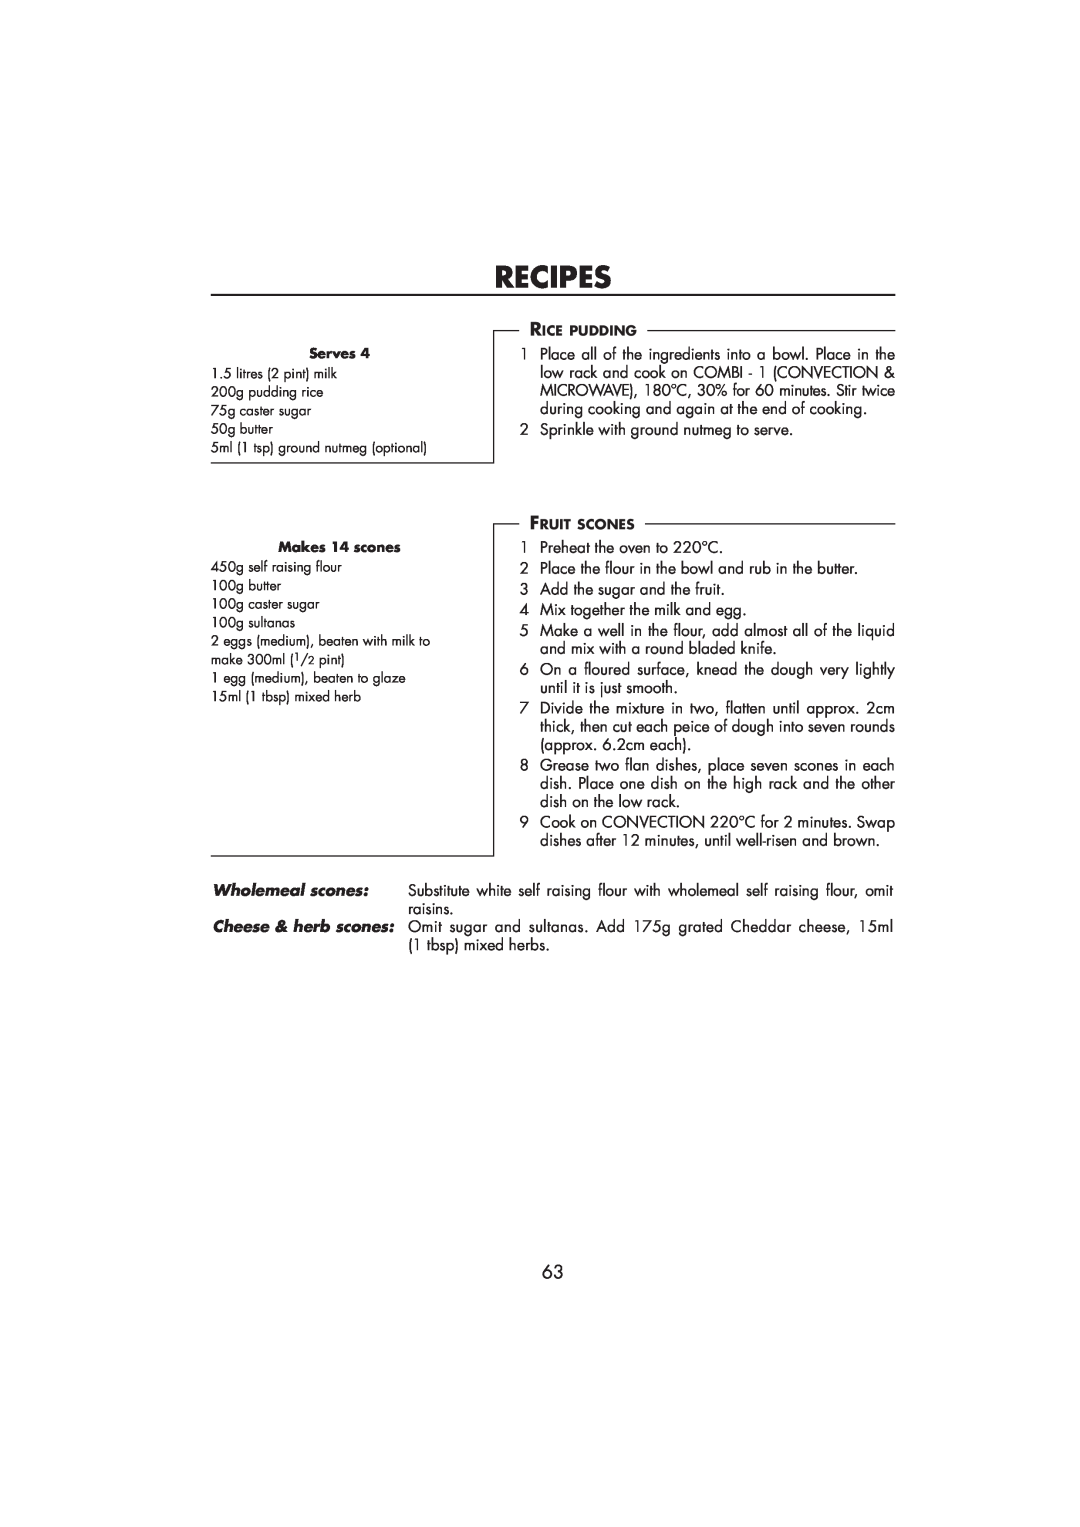 Sharp R-890SLM operation manual Recipes, Sprinkle with ground nutmeg to serve 